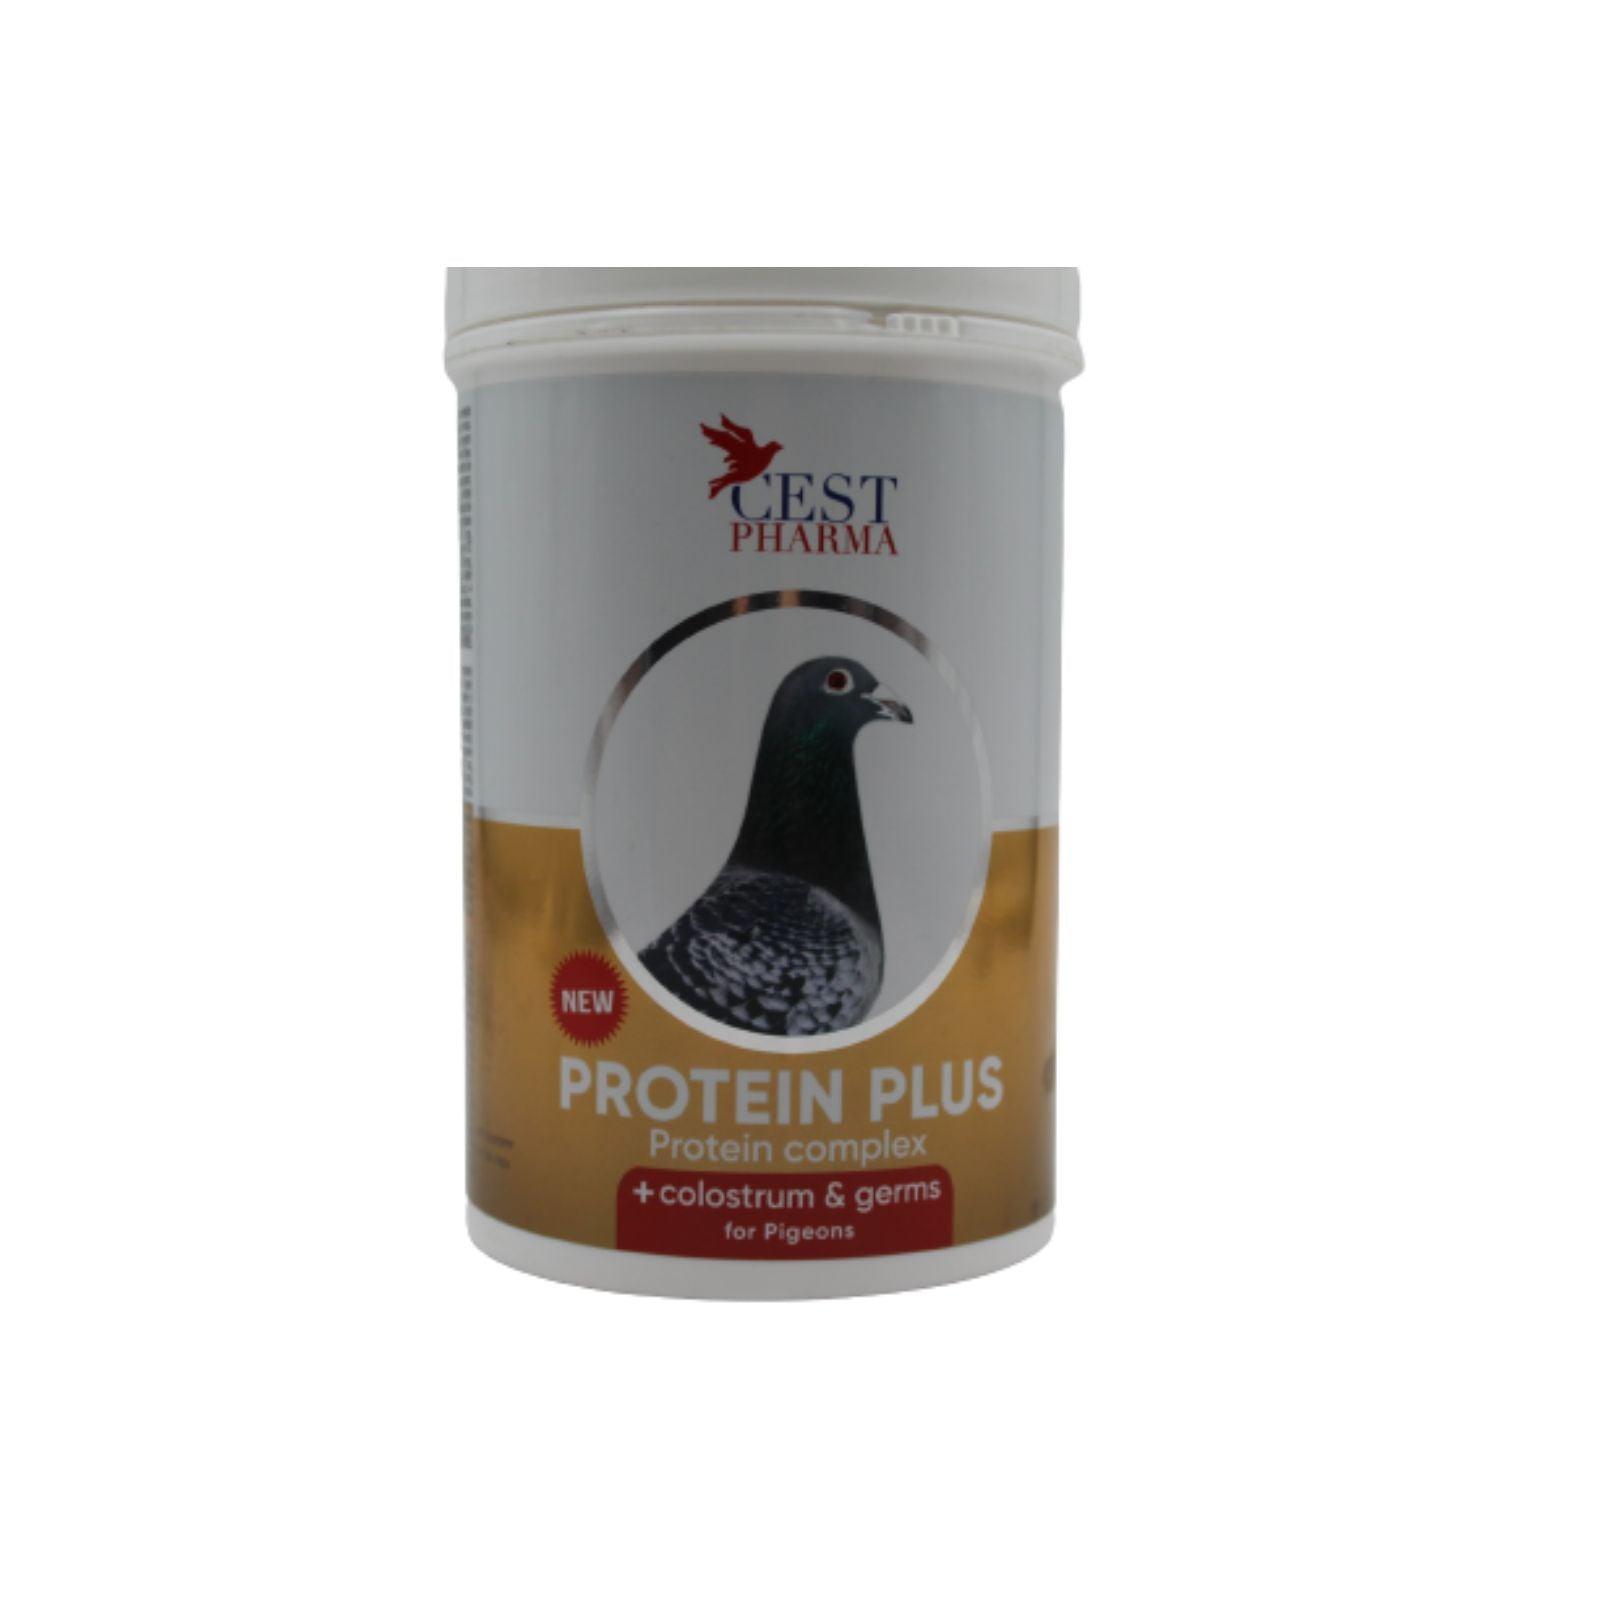 Protein Plus 600g Cest Pharma - DalisPet